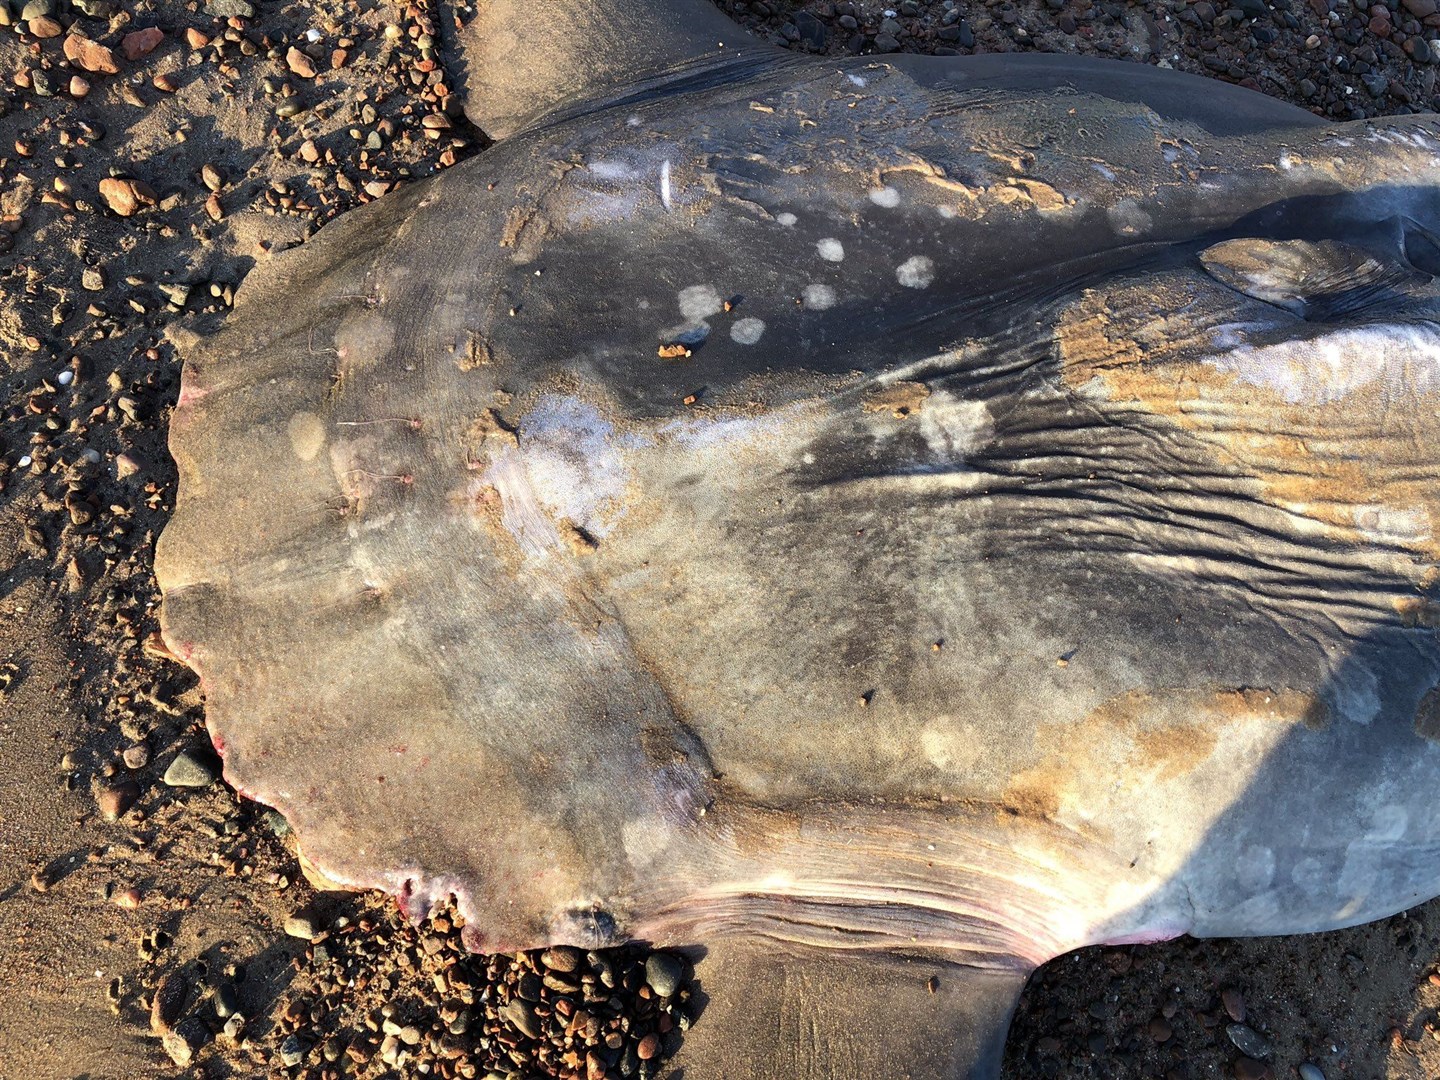 An Ocean Sunfish washed up on Rosemarkie beach.